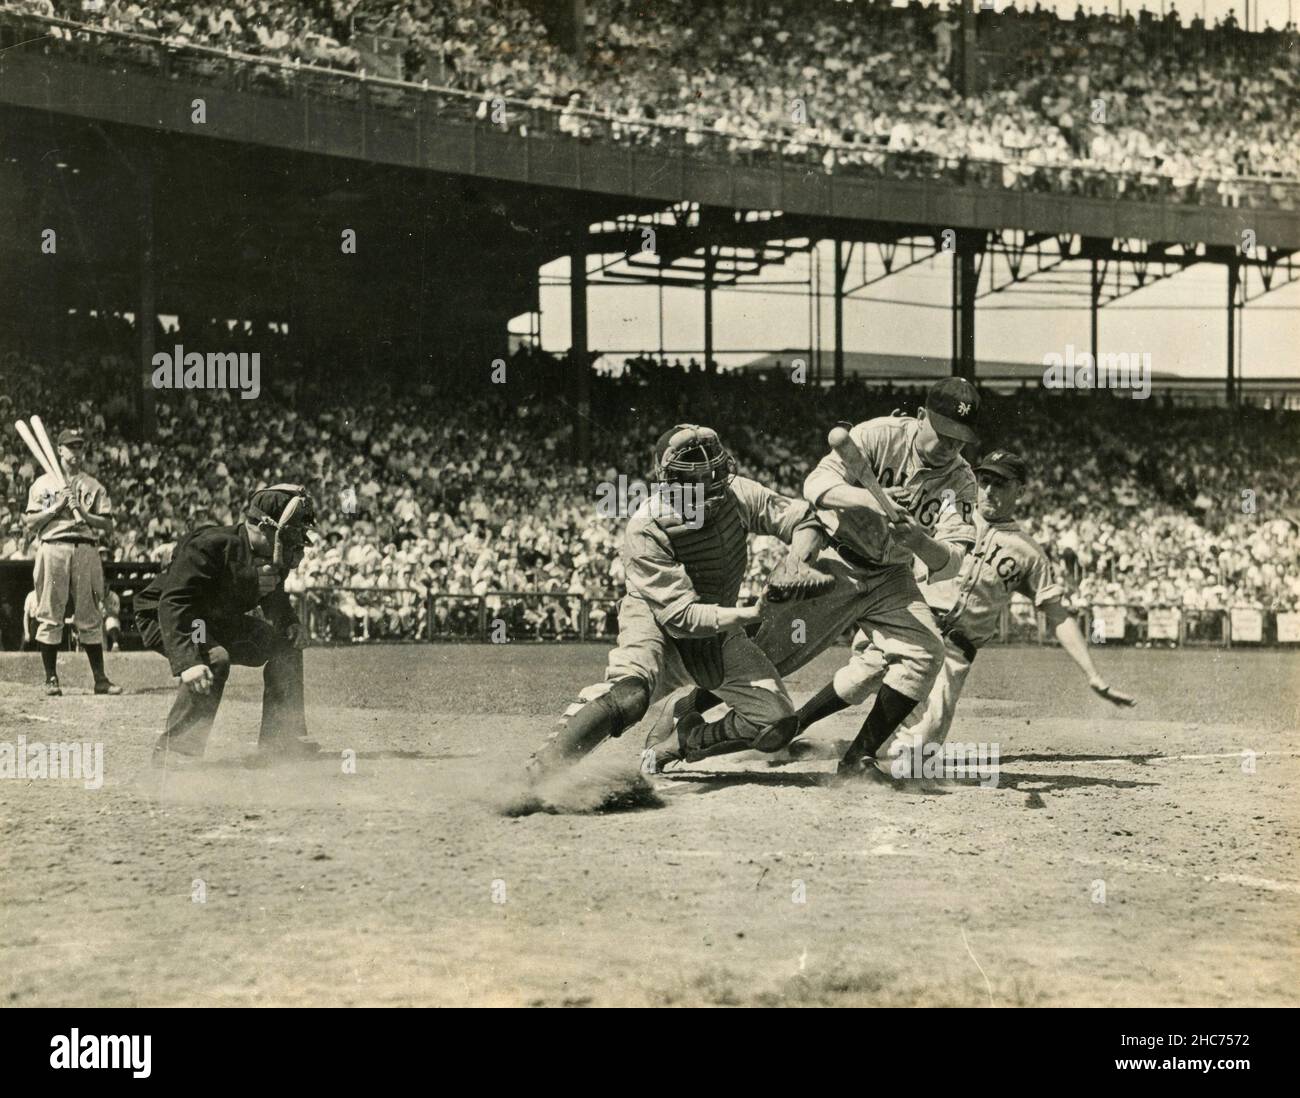 American Baseballspieler in Aktion, USA 1940s Stockfoto